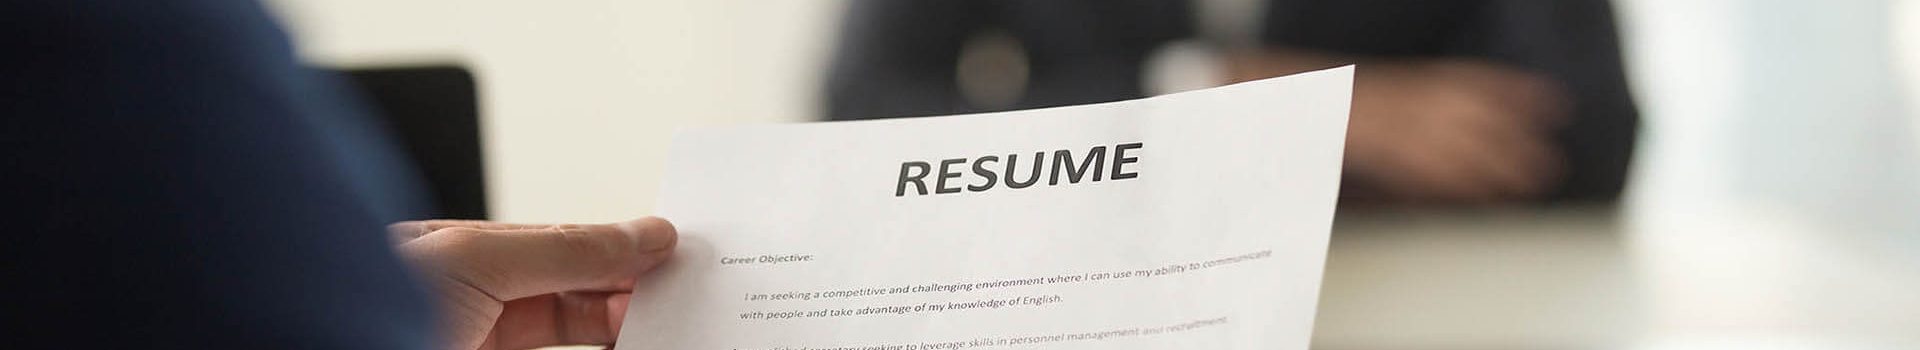 hand holding resume